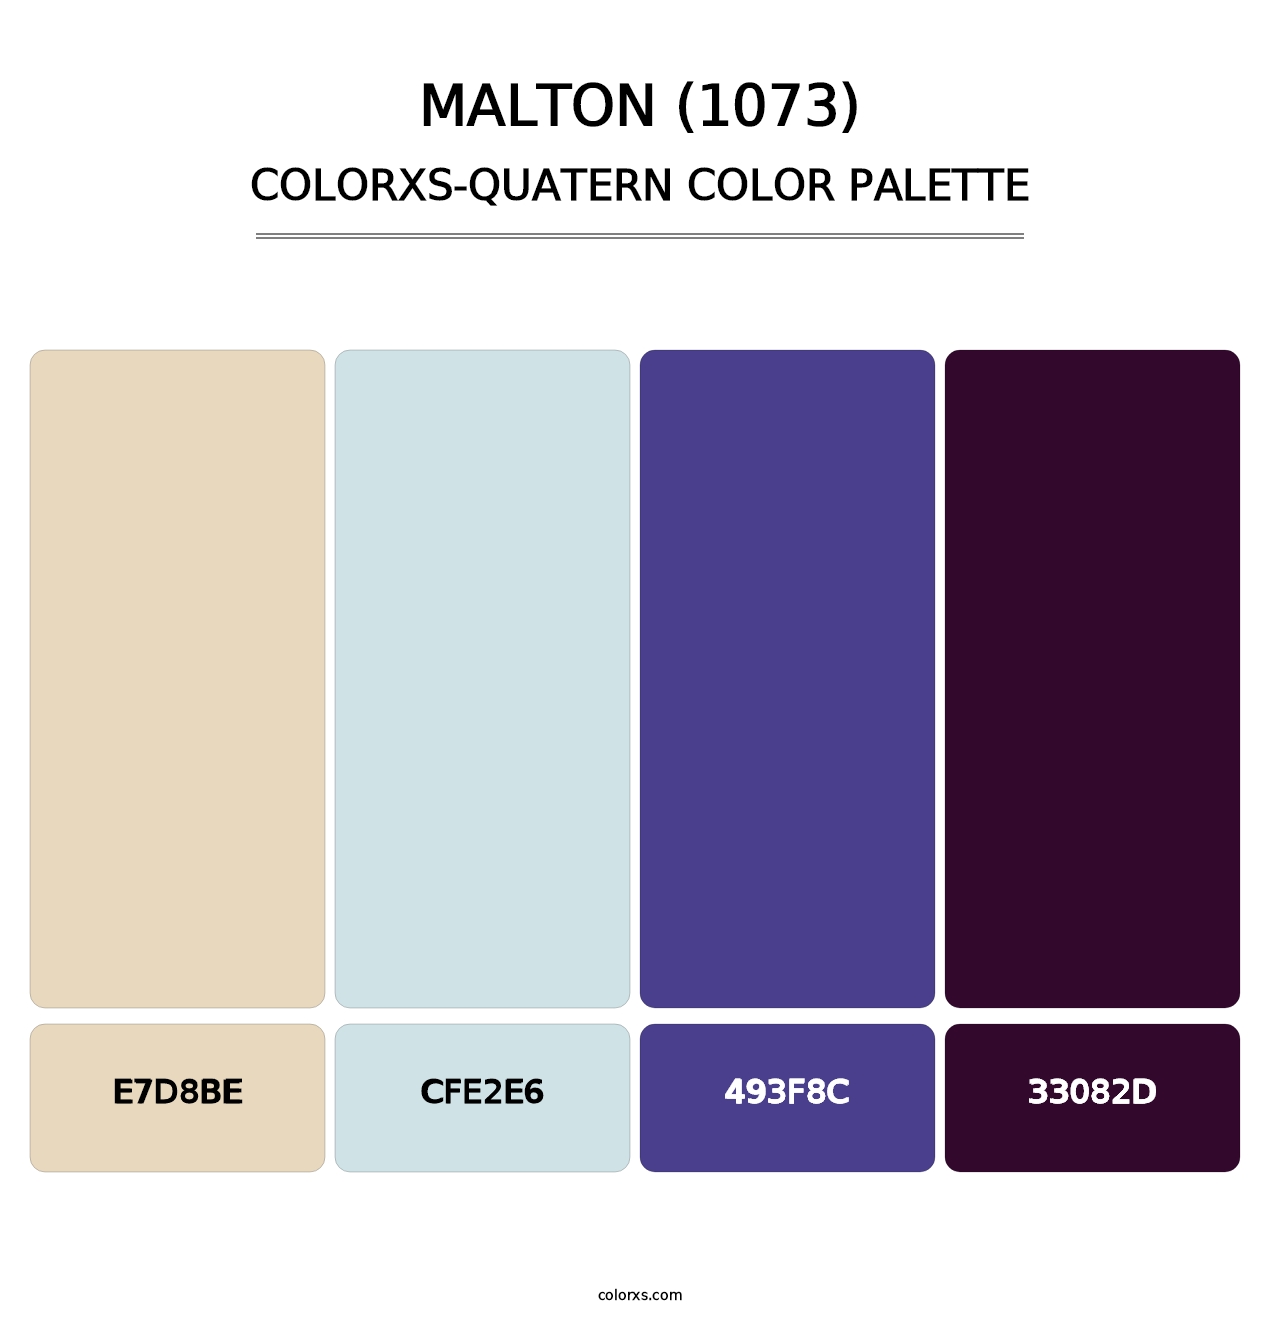 Malton (1073) - Colorxs Quatern Palette